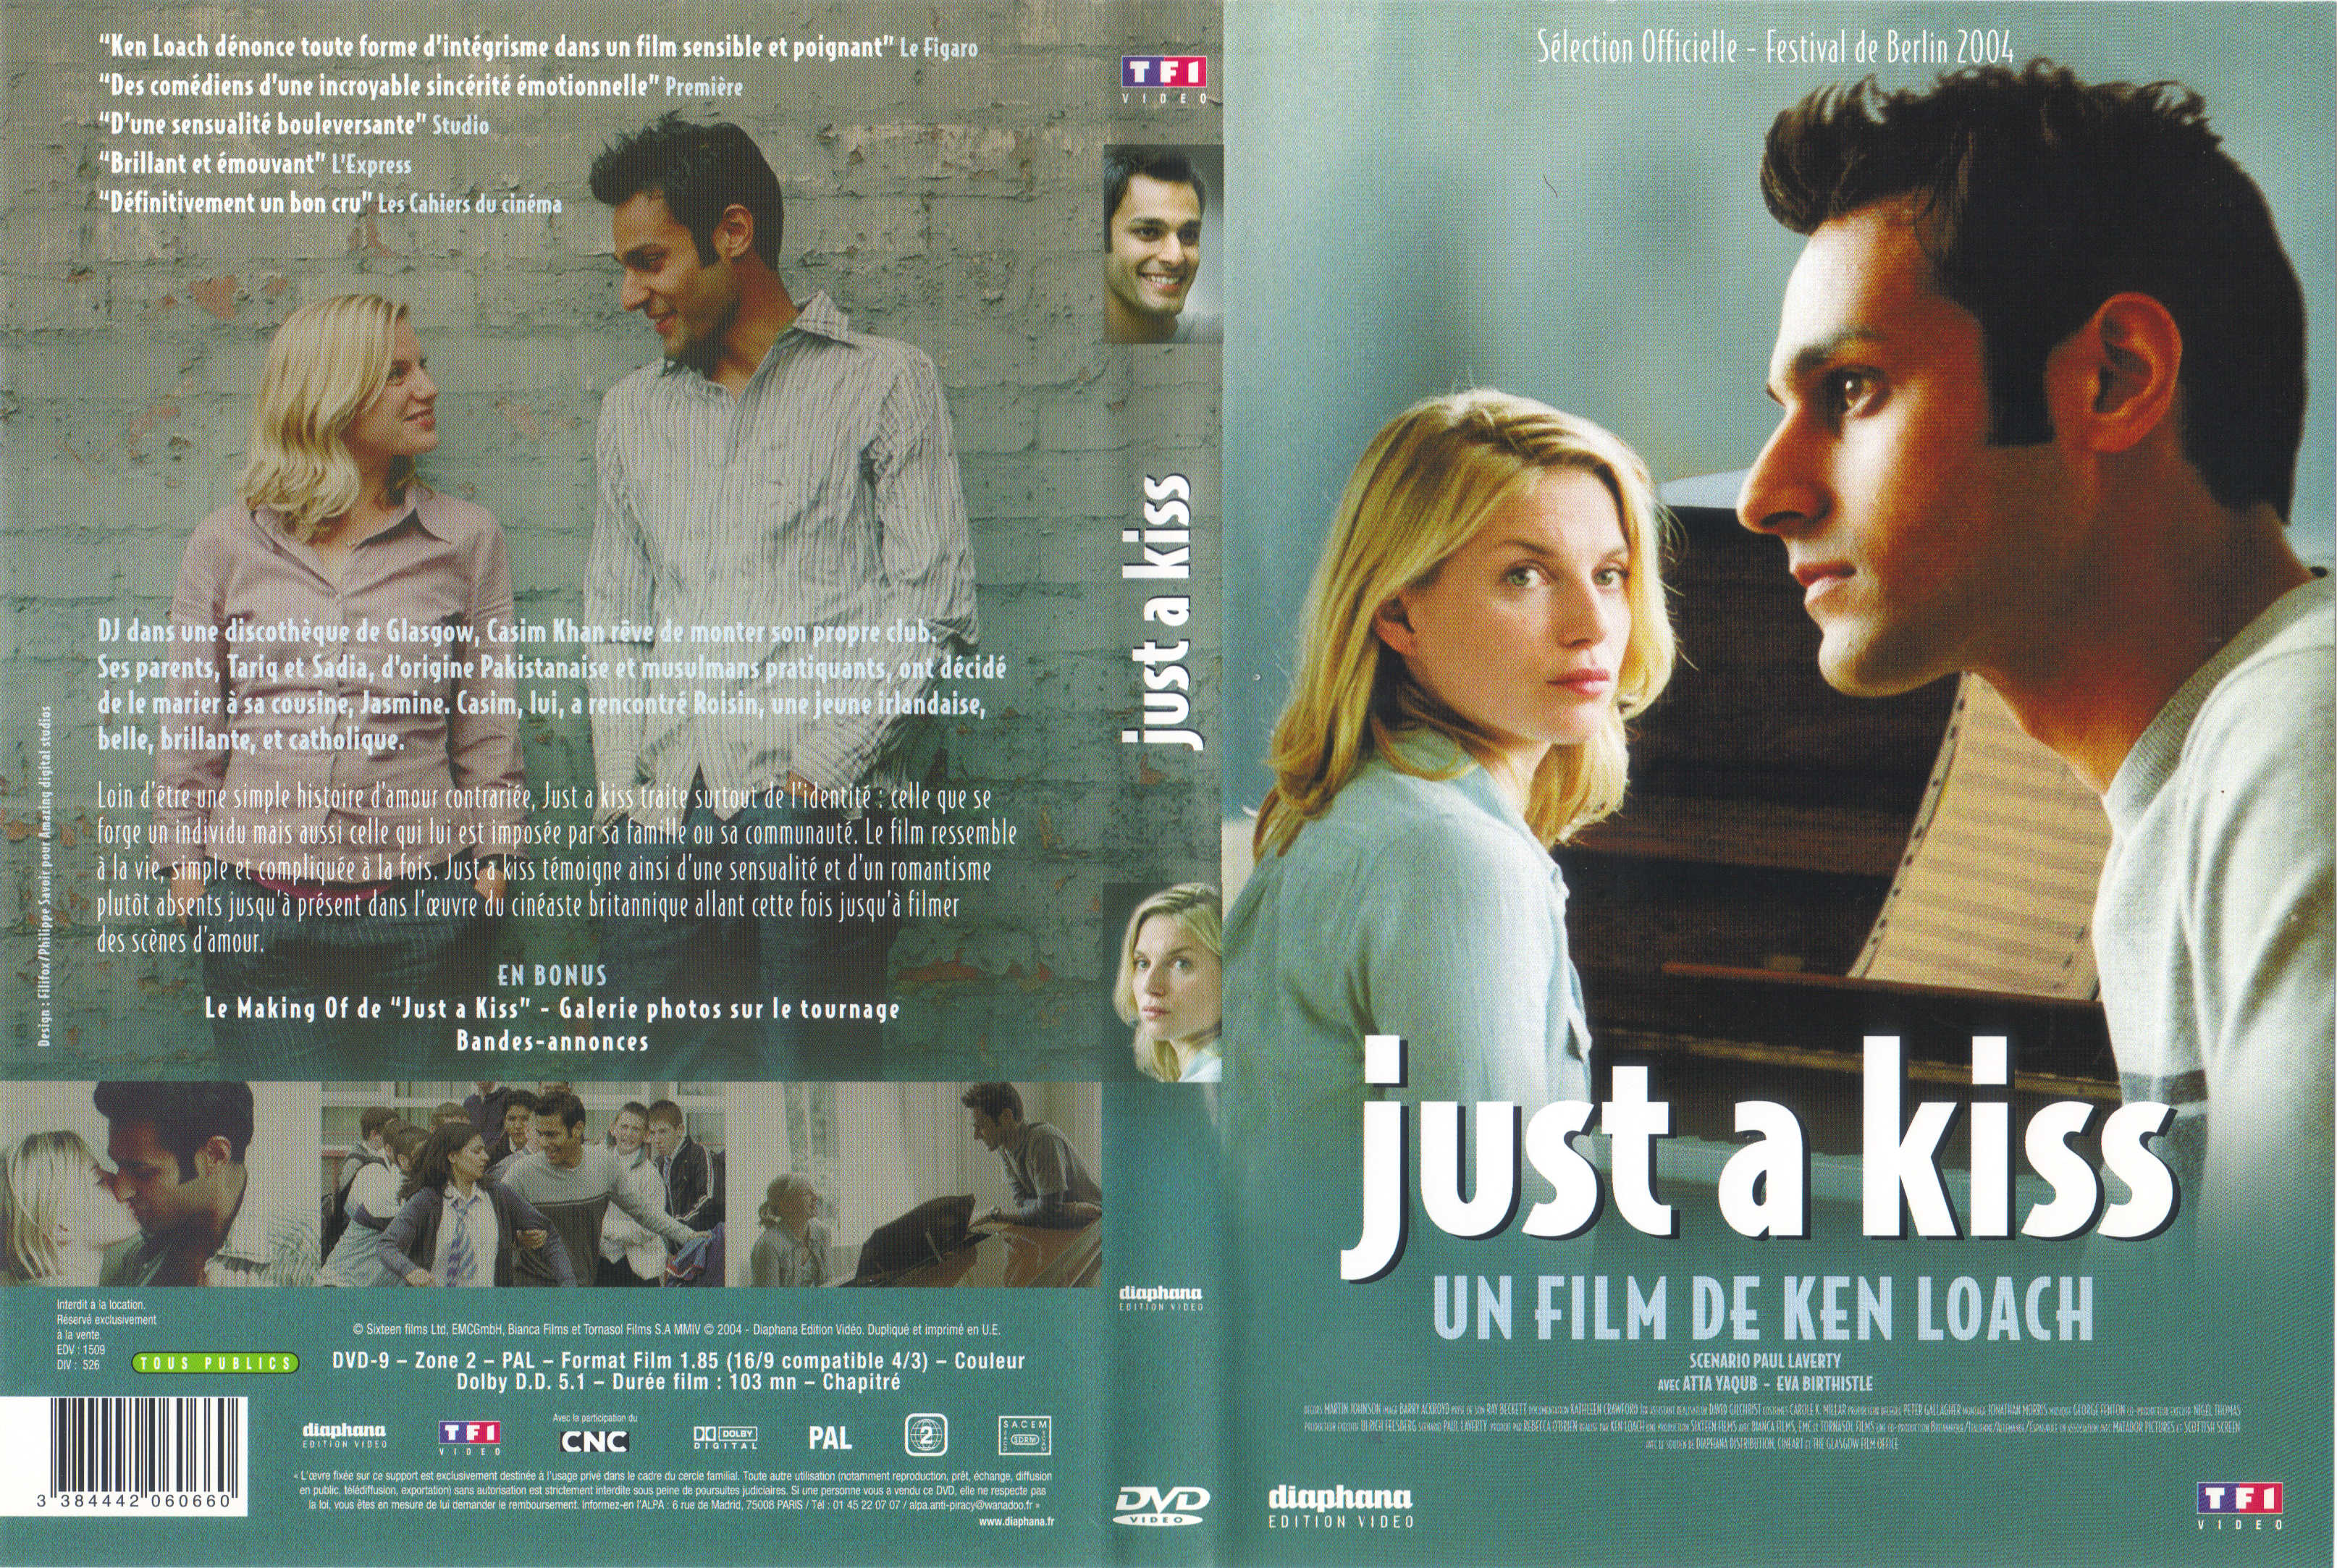 Jaquette DVD Just a kiss v2